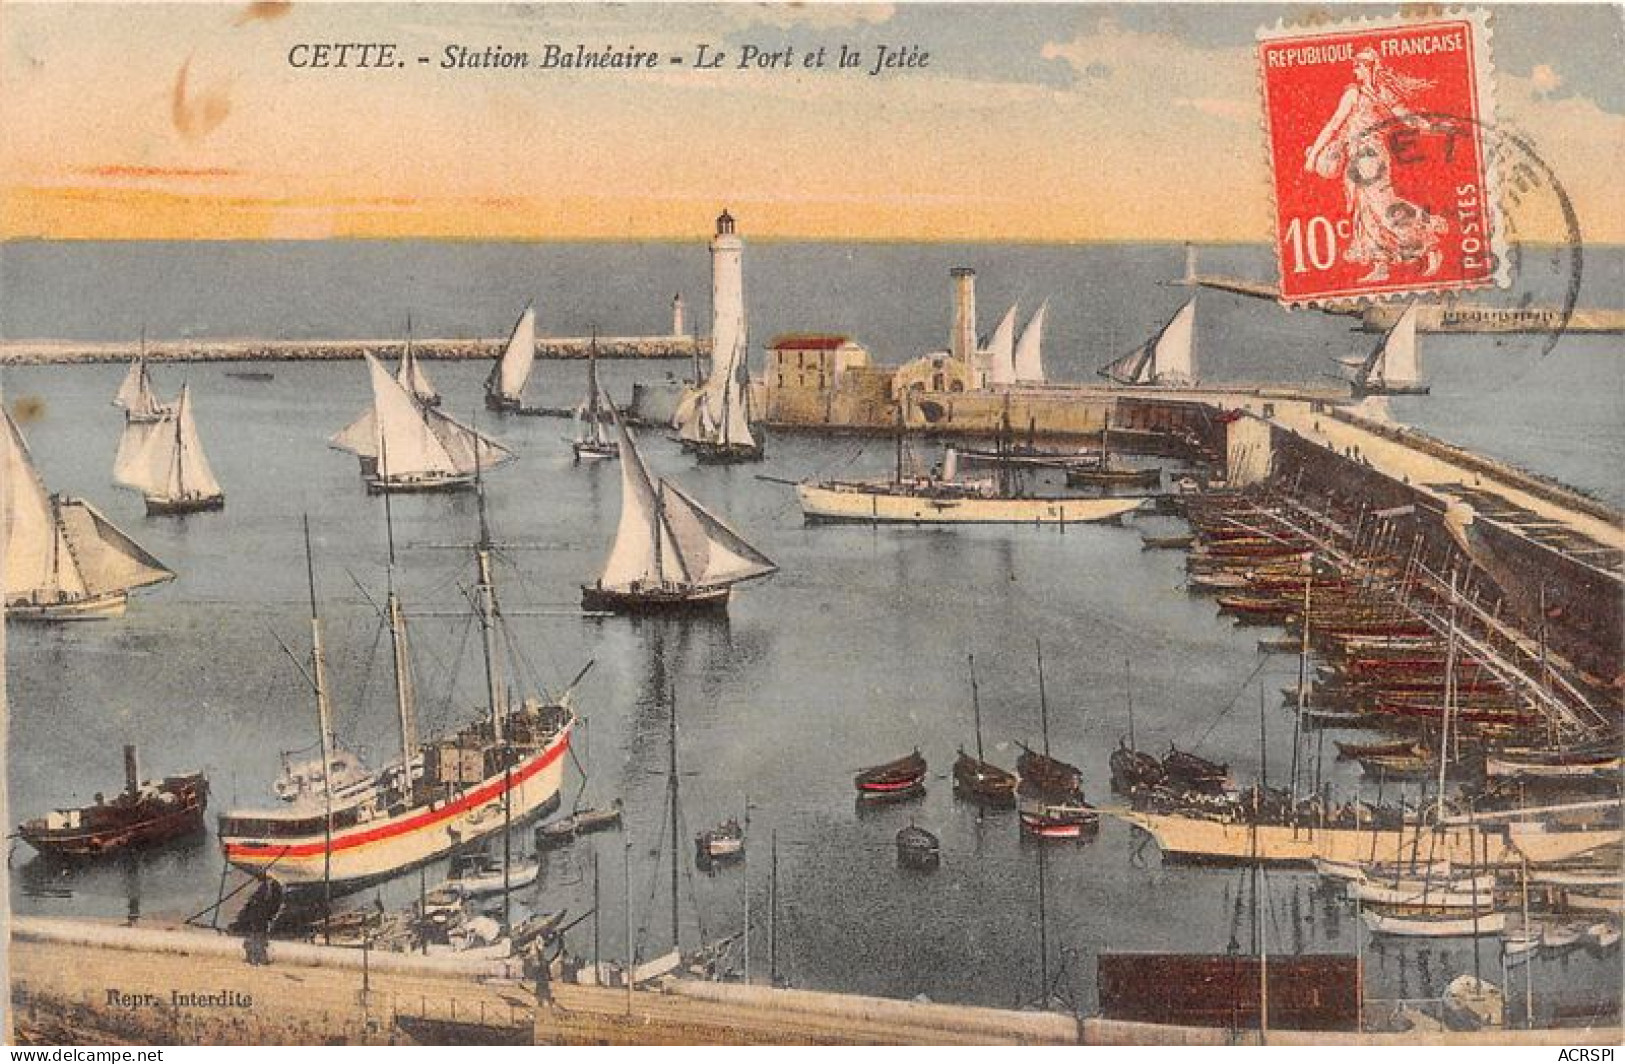 CETTE Station Balneaire Le Port De La Jetee 10(scan Recto-verso) MA1094 - Sete (Cette)